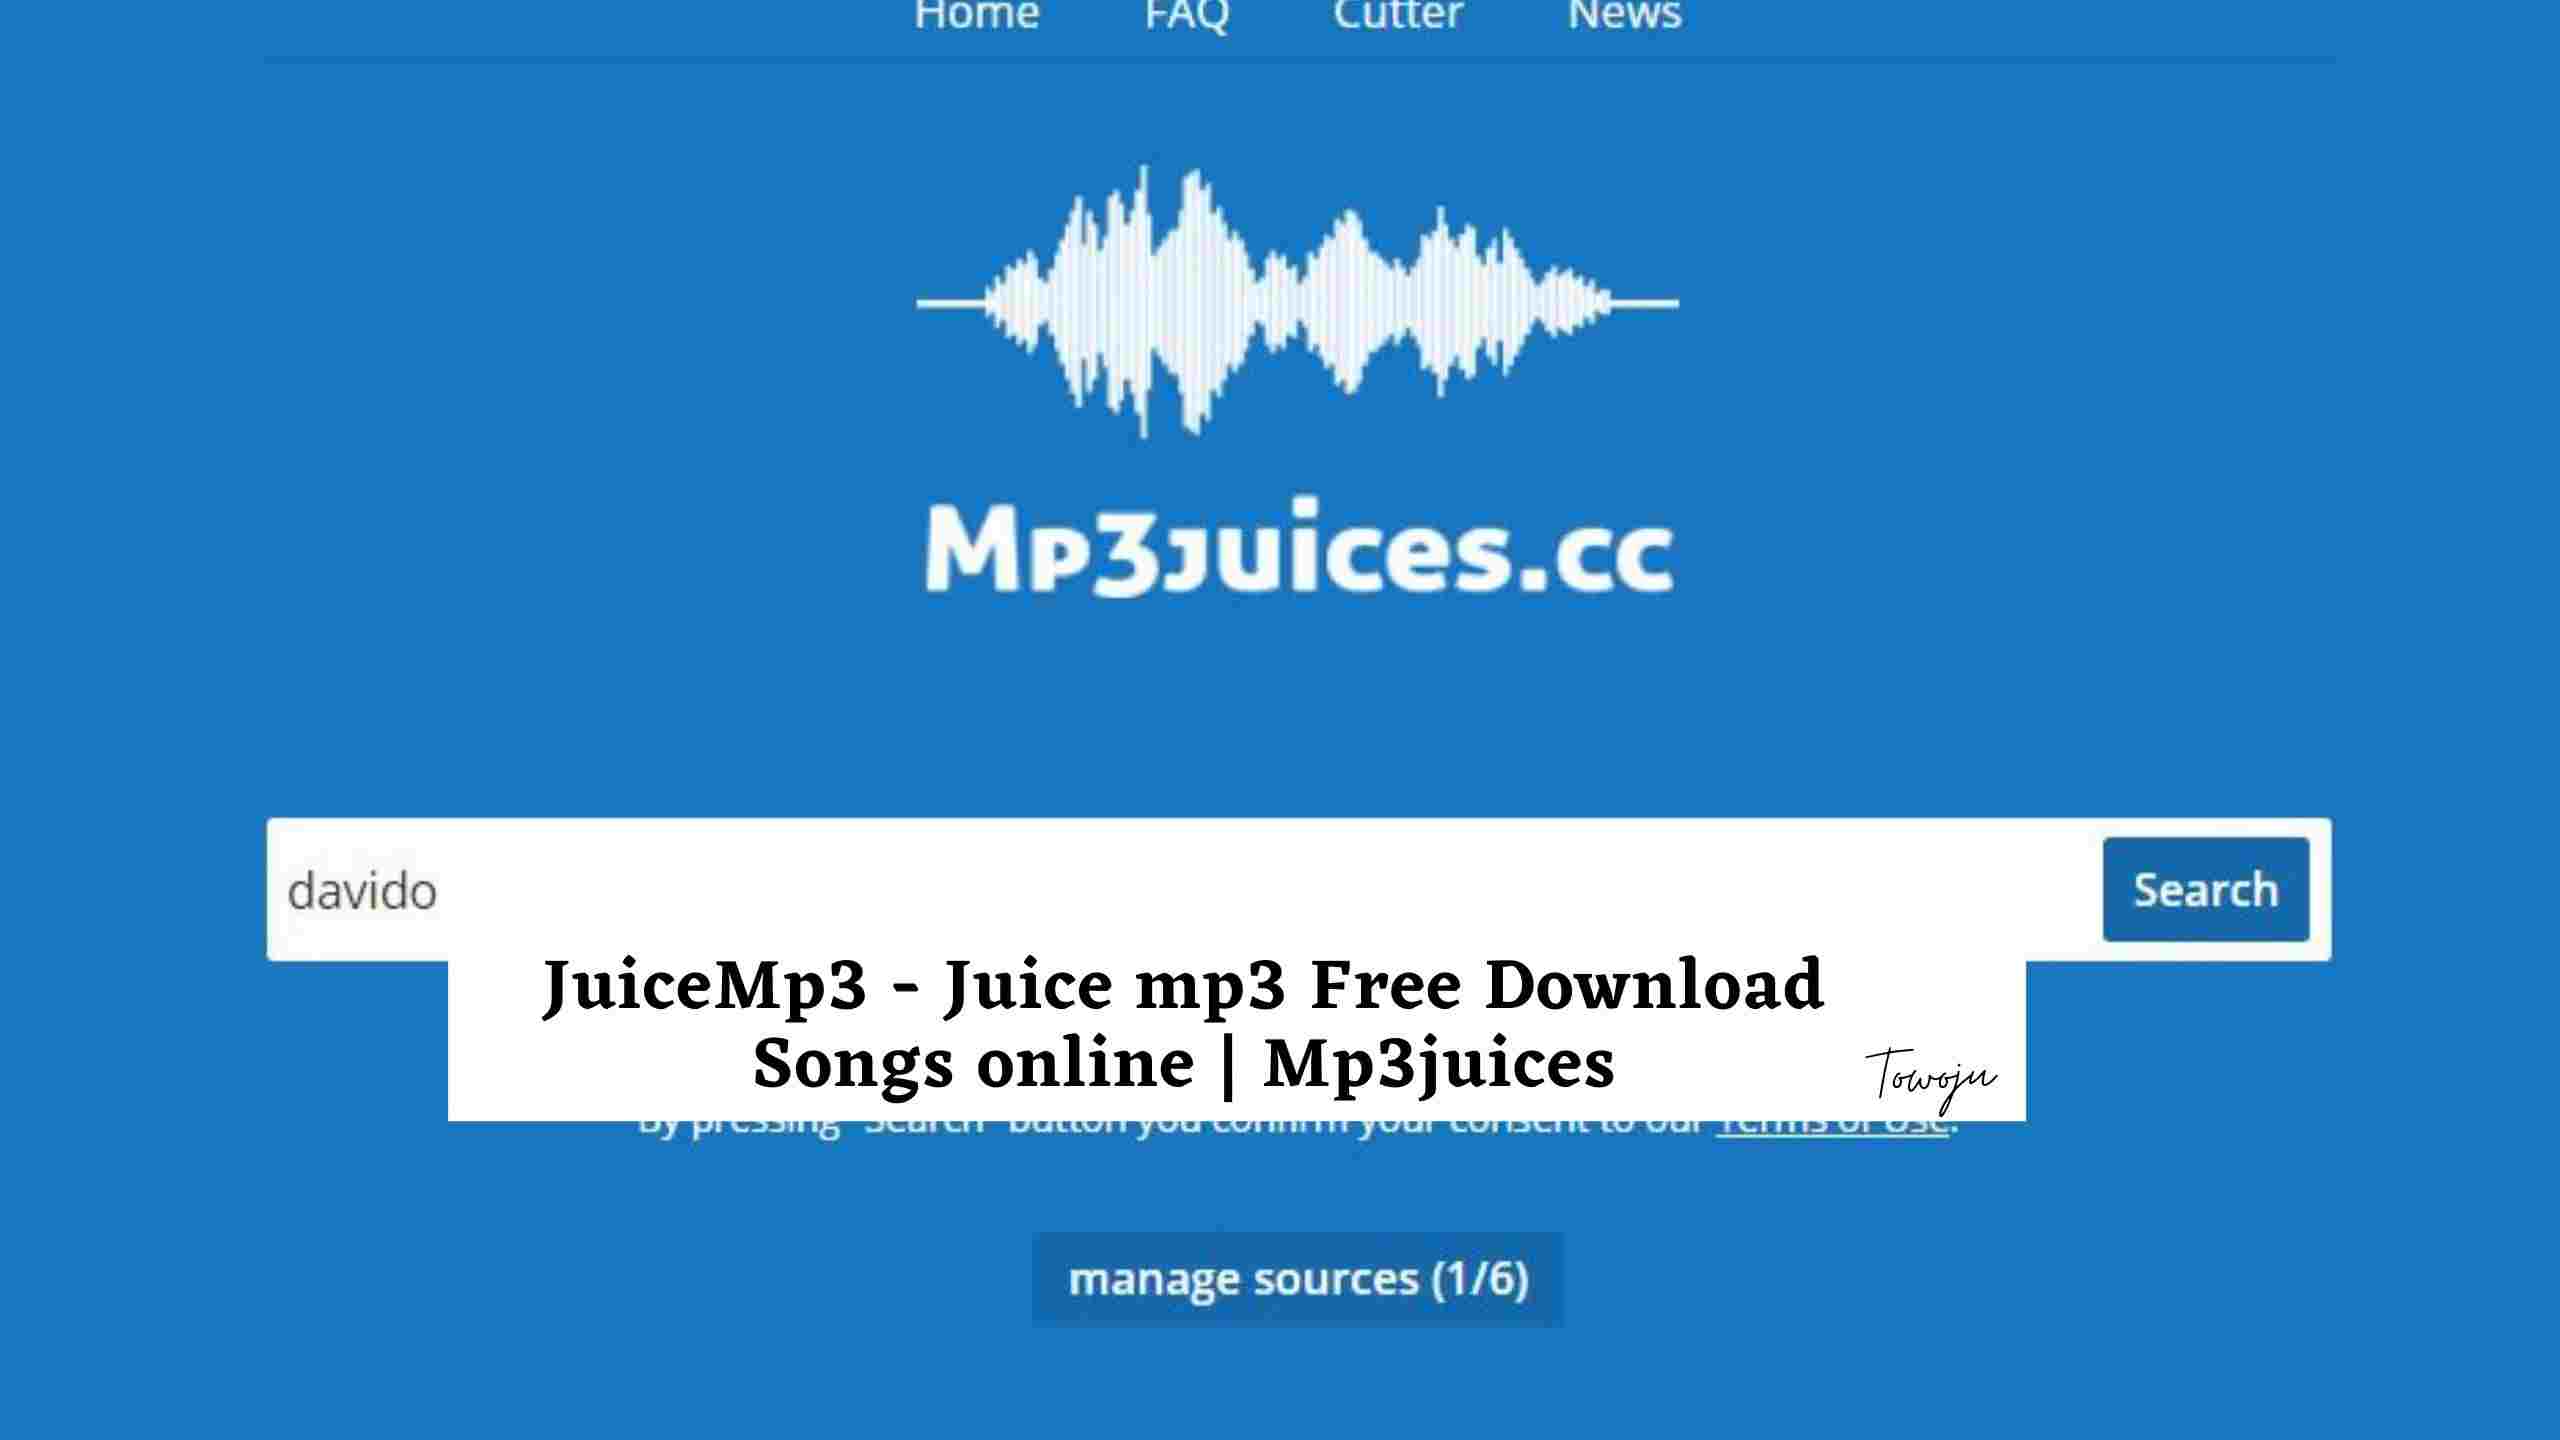 JuiceMp3 – Juice mp3 Free Download Songs online | Mp3juices